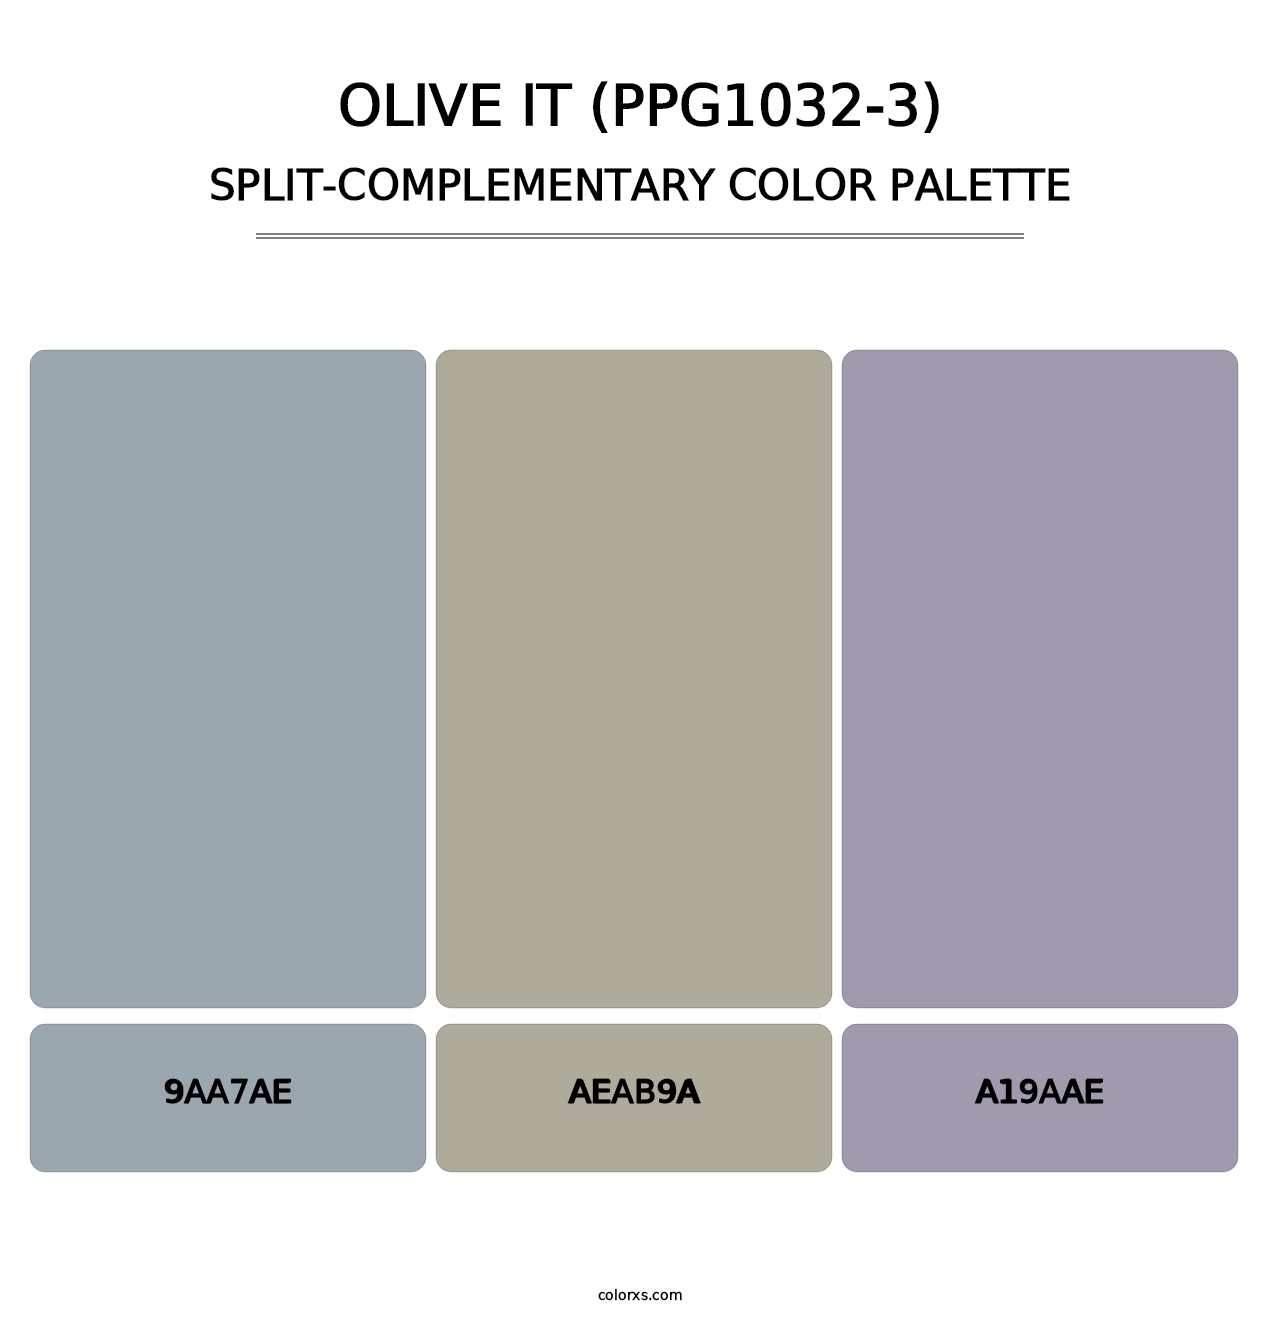 Olive It (PPG1032-3) - Split-Complementary Color Palette